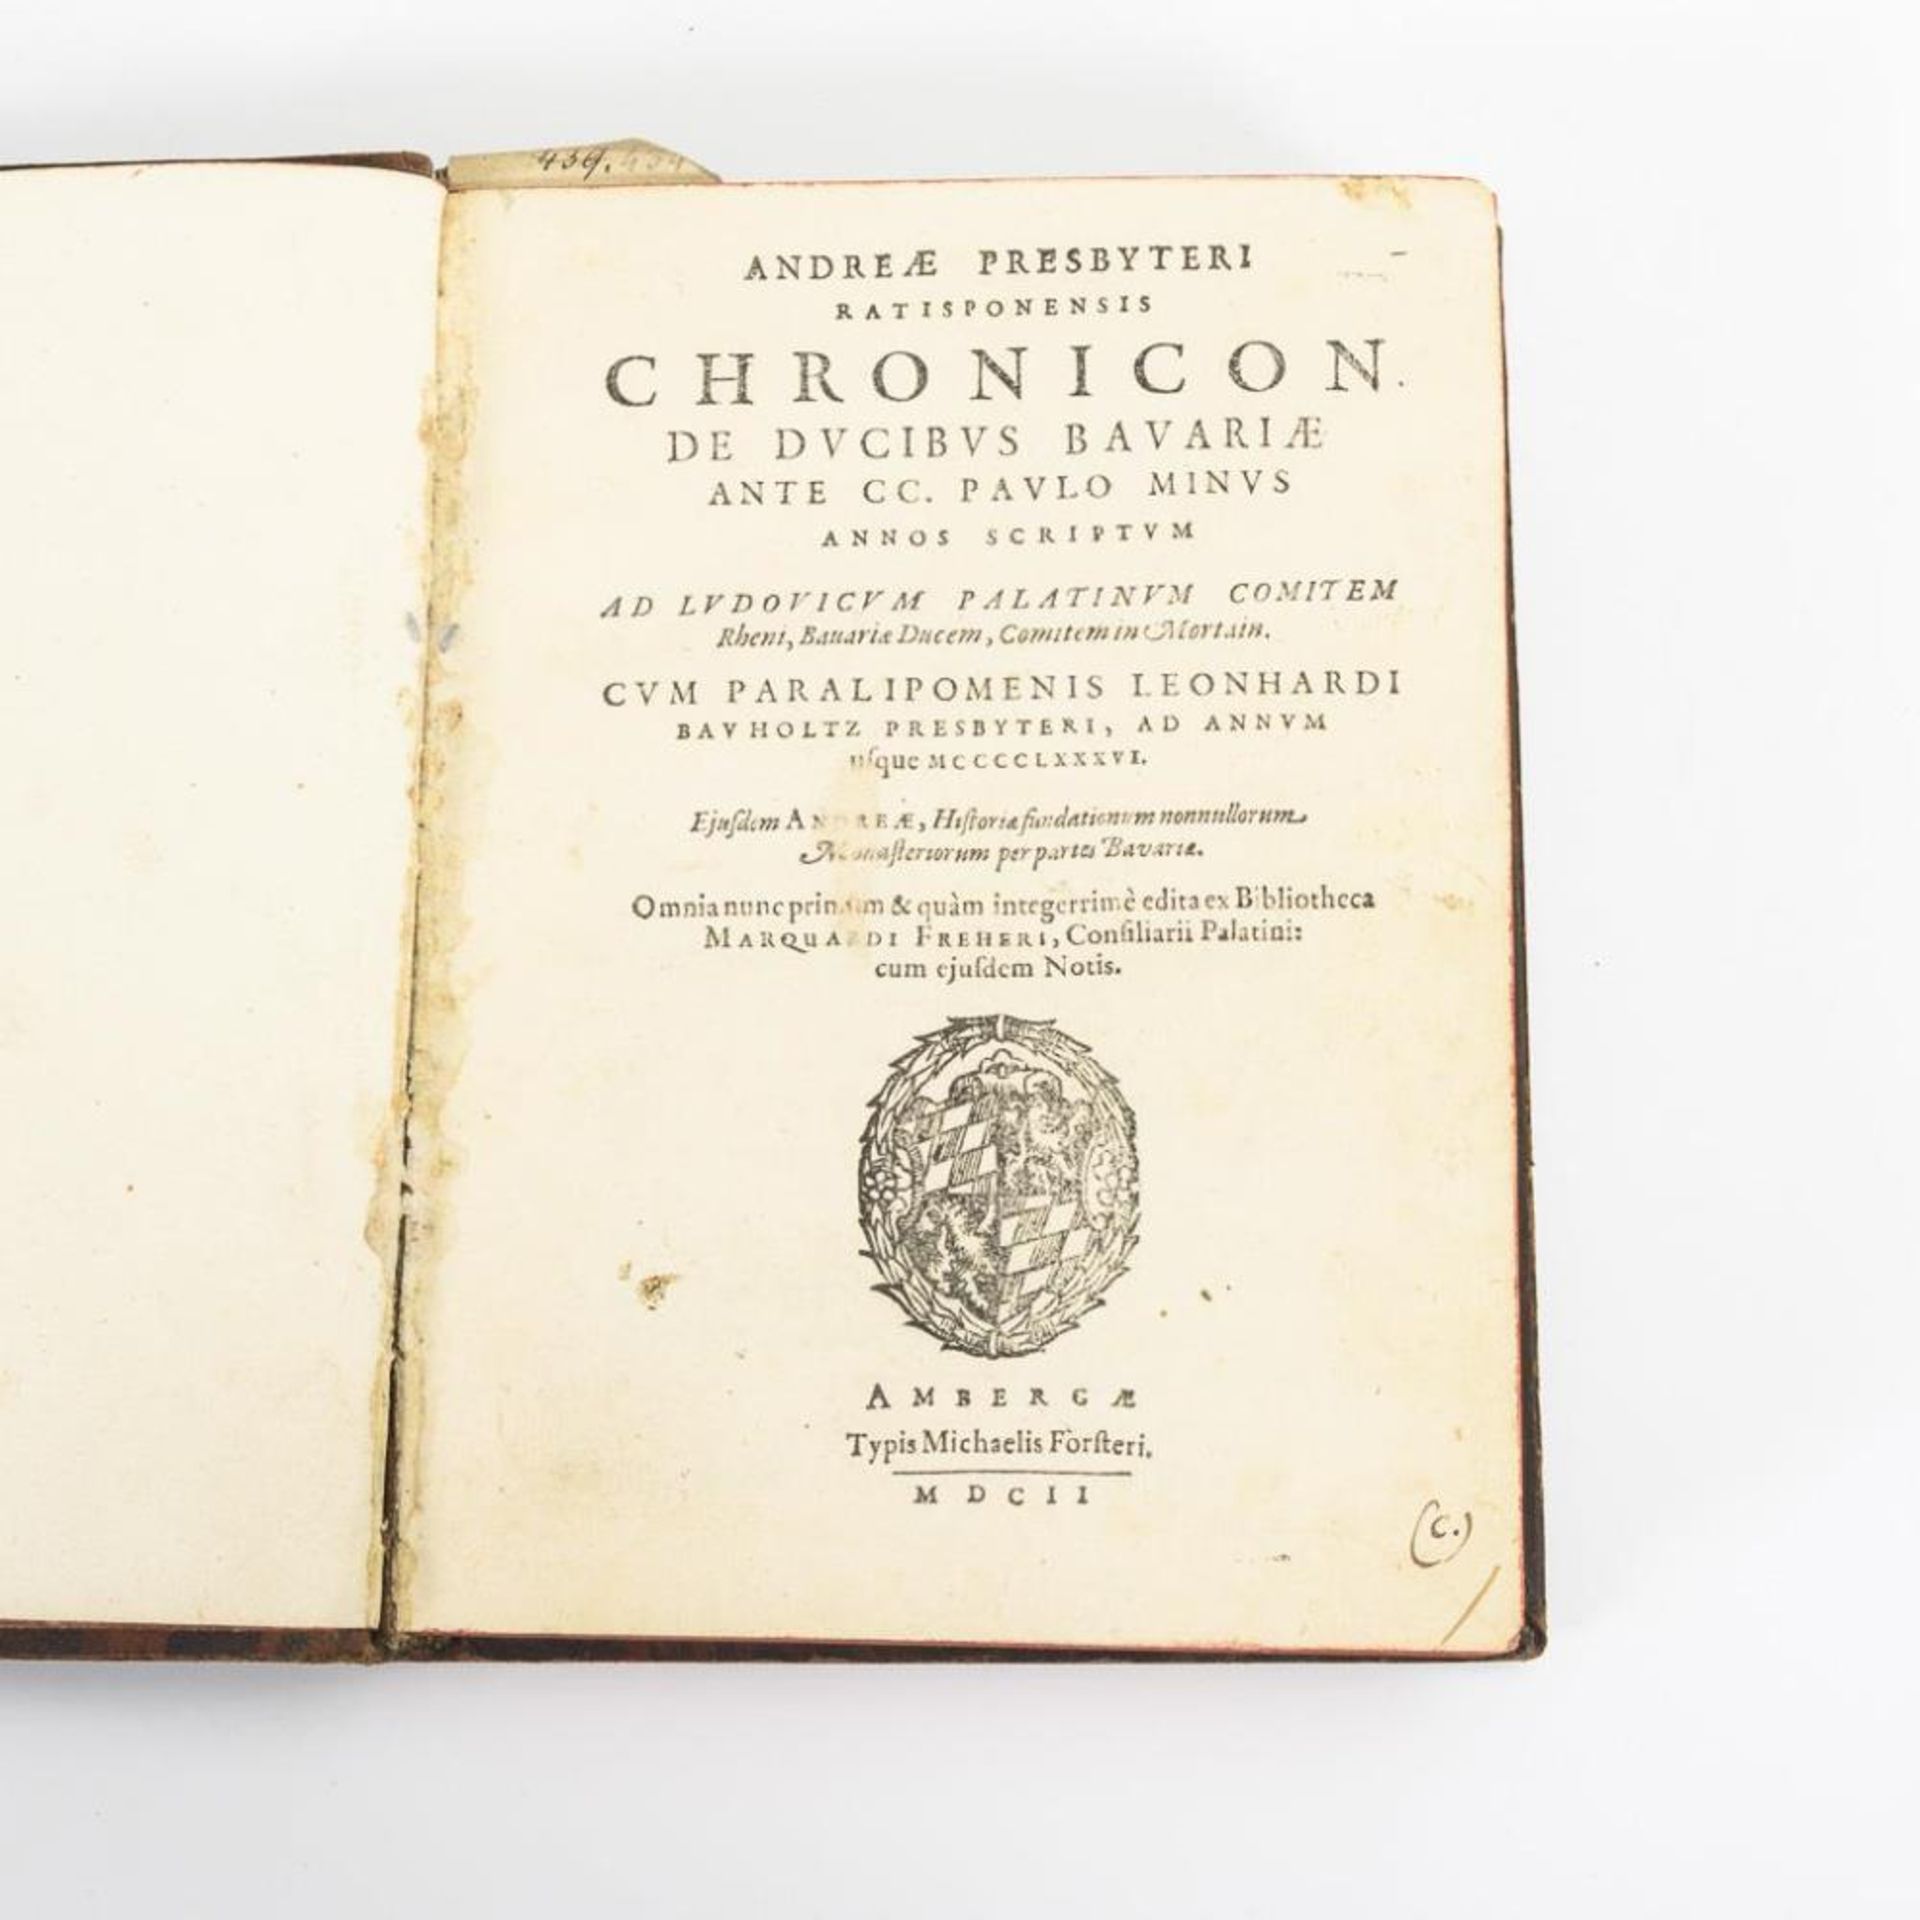 VON REGENSBURG, Andreas (Andreae Presbyteri Ratisponensis). "Chronicon De Ducibus Bavariae".